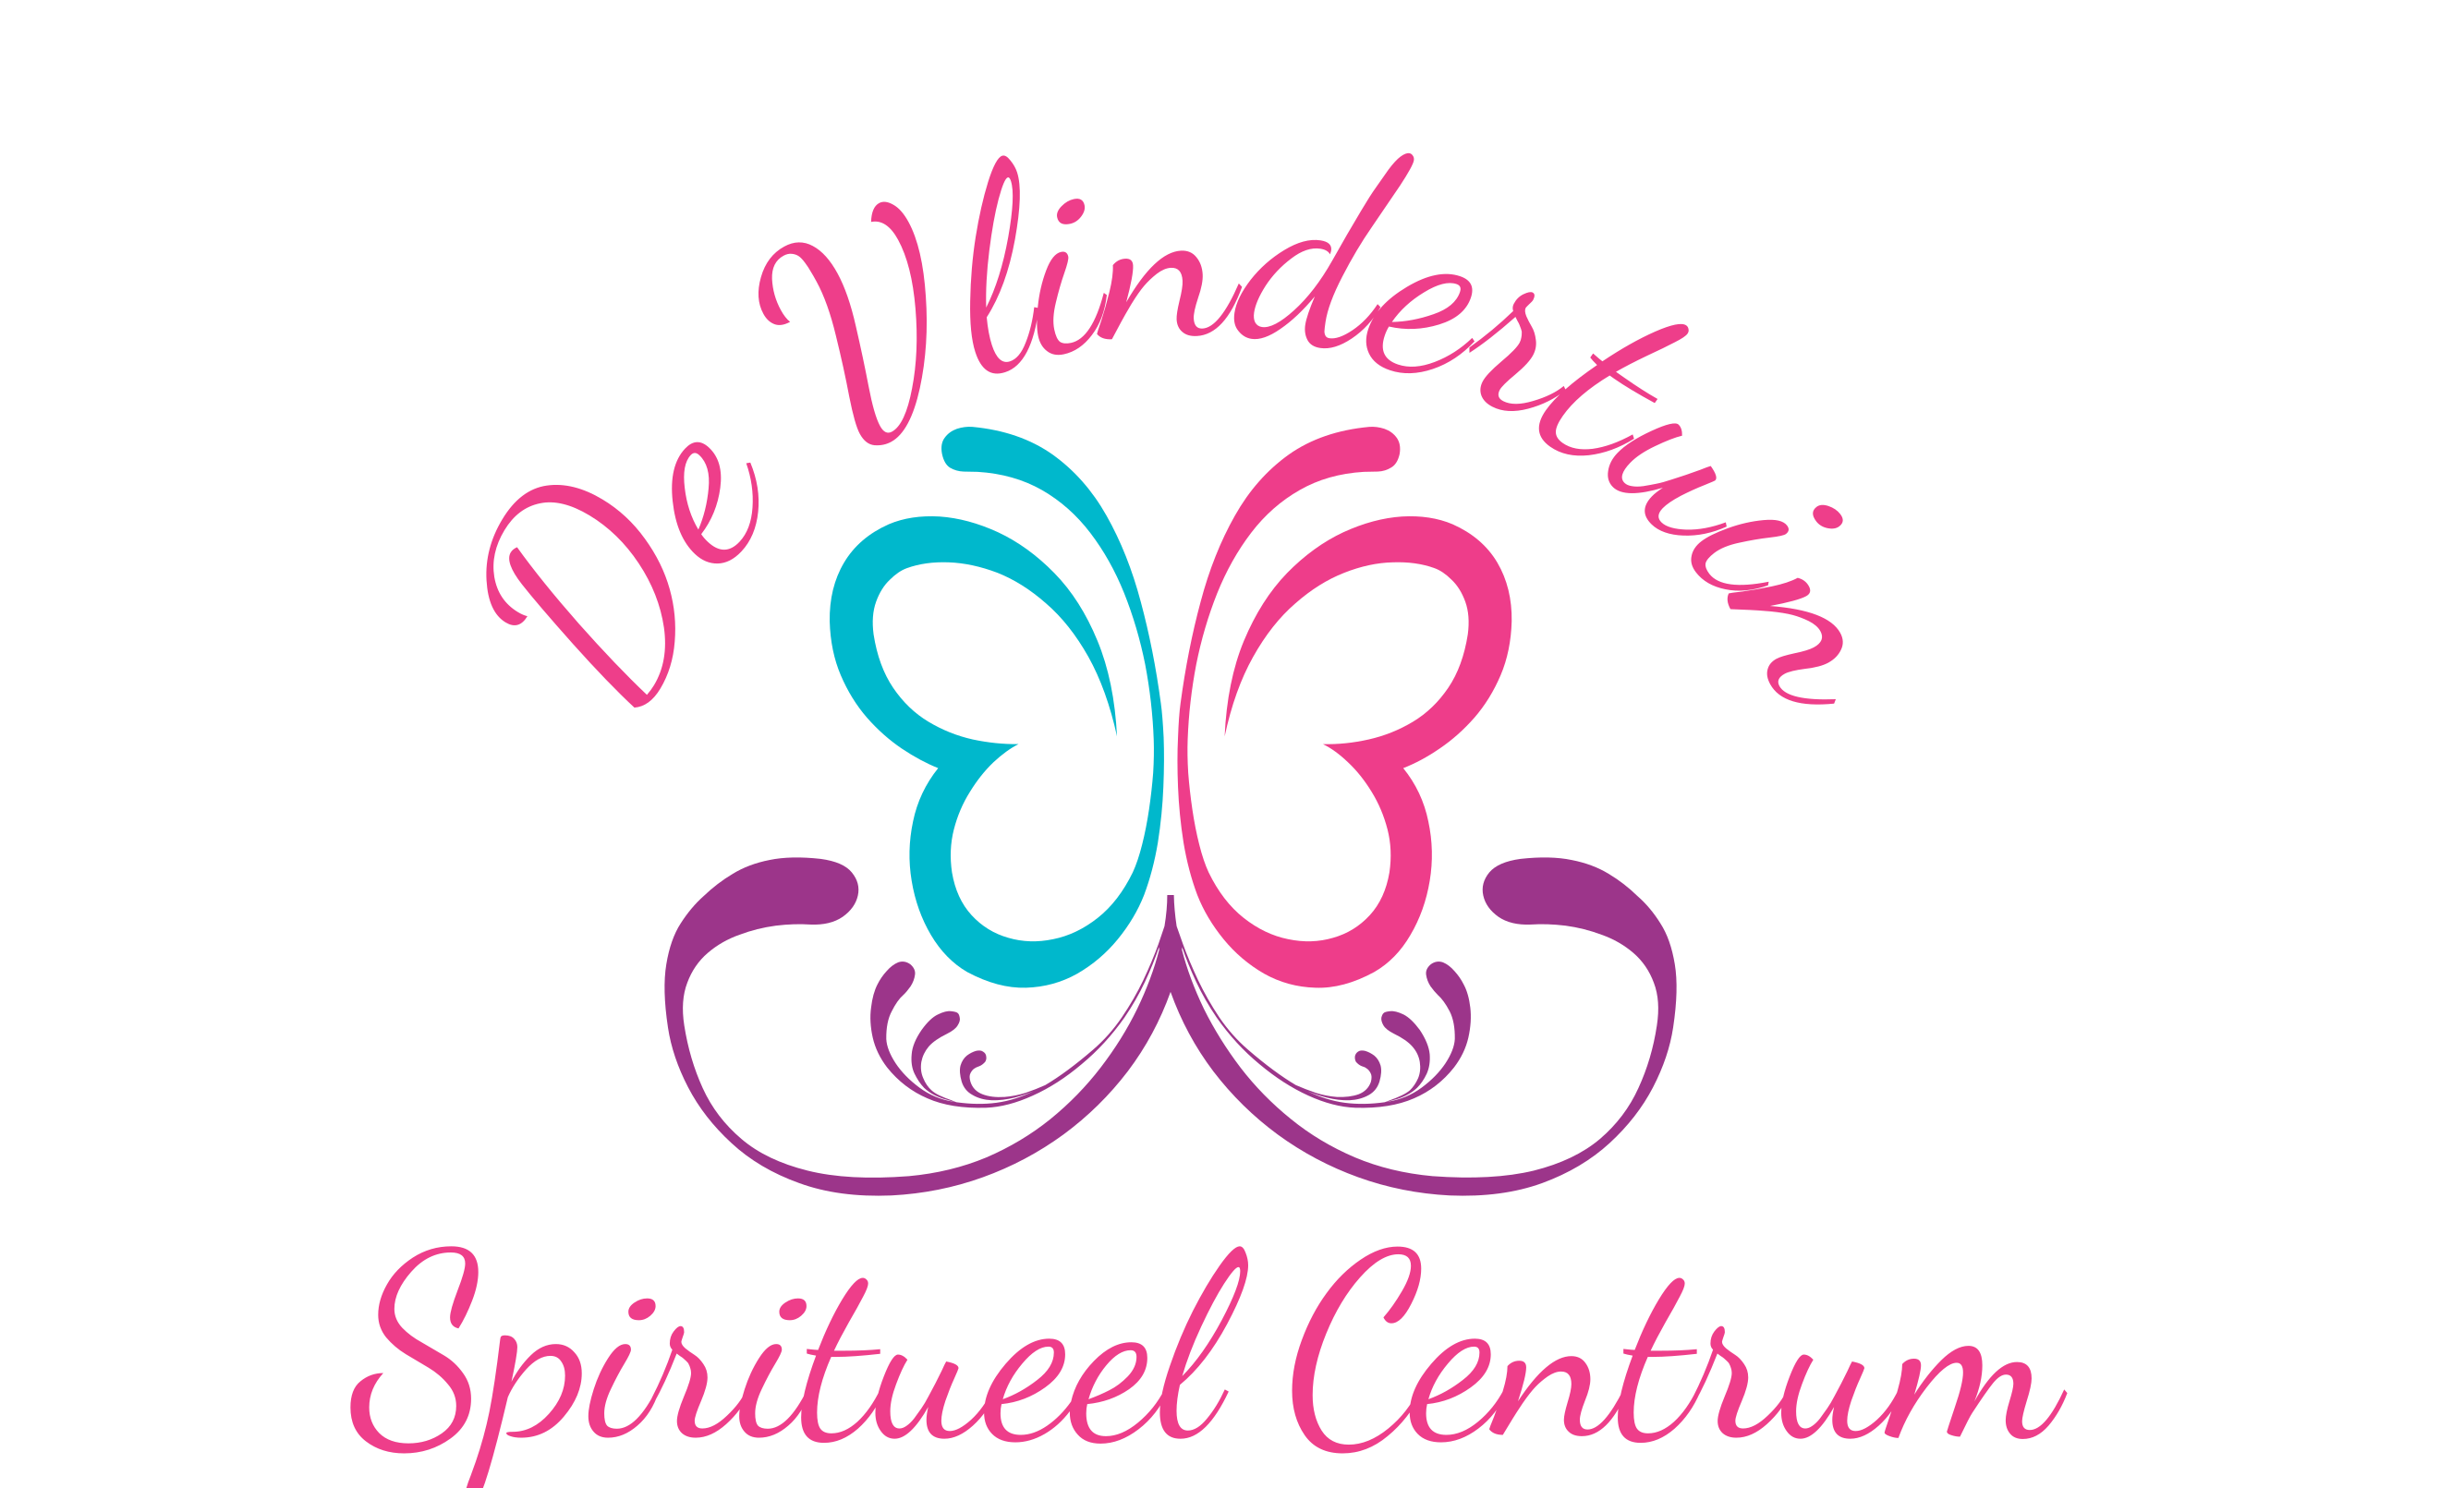 Spiritueel Centrum De Vlindertuin